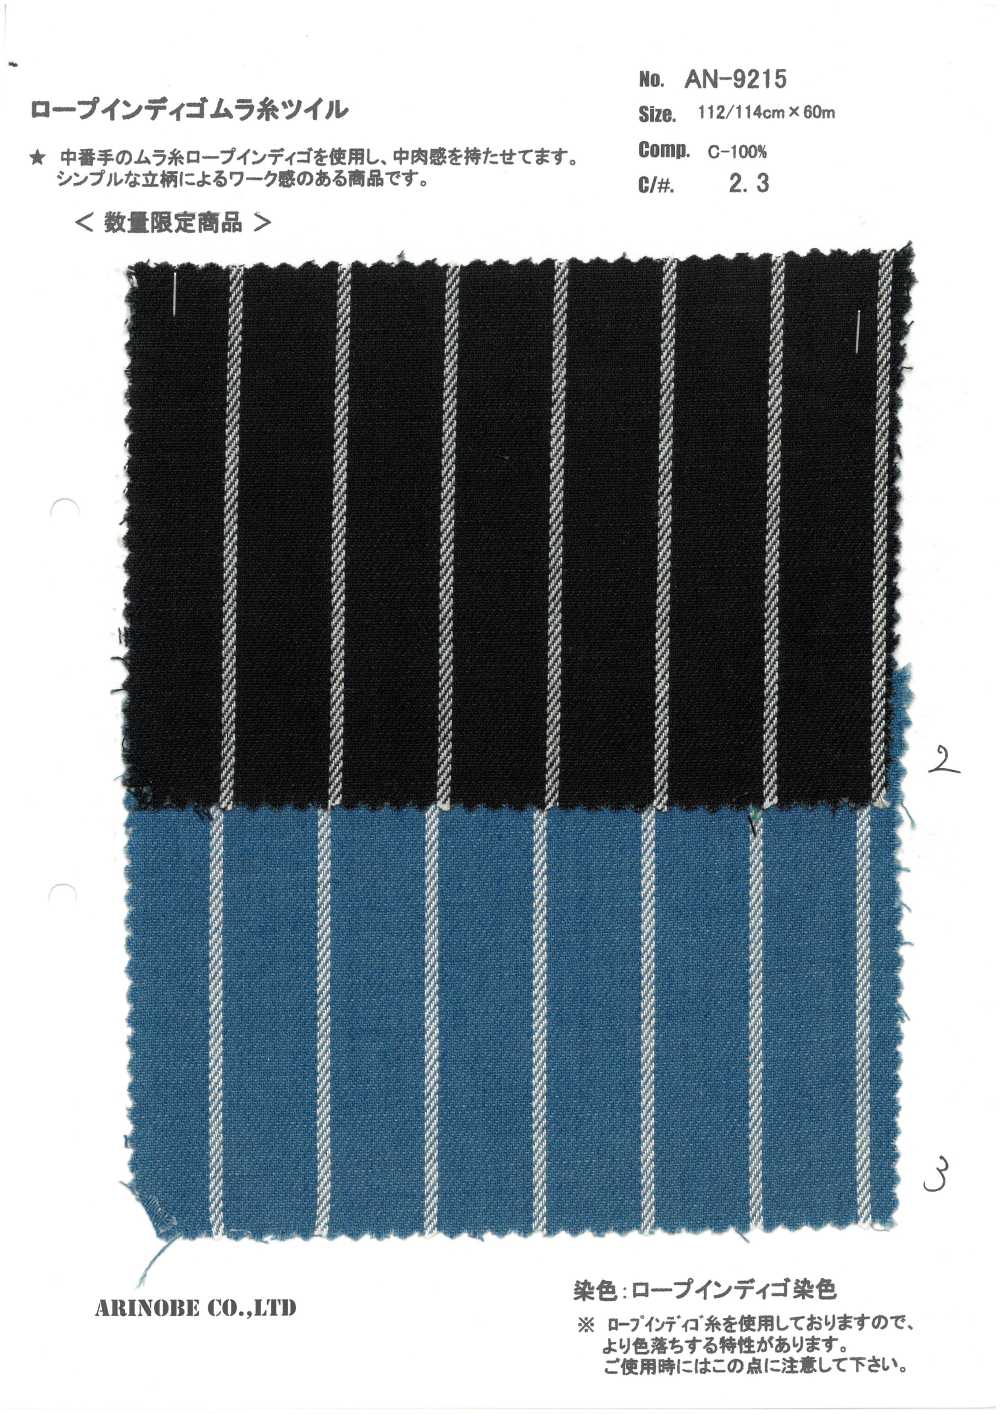 AN-9215 Cuerda Sarga Hilo Desigual Añil[Fabrica Textil] ARINOBE CO., LTD.